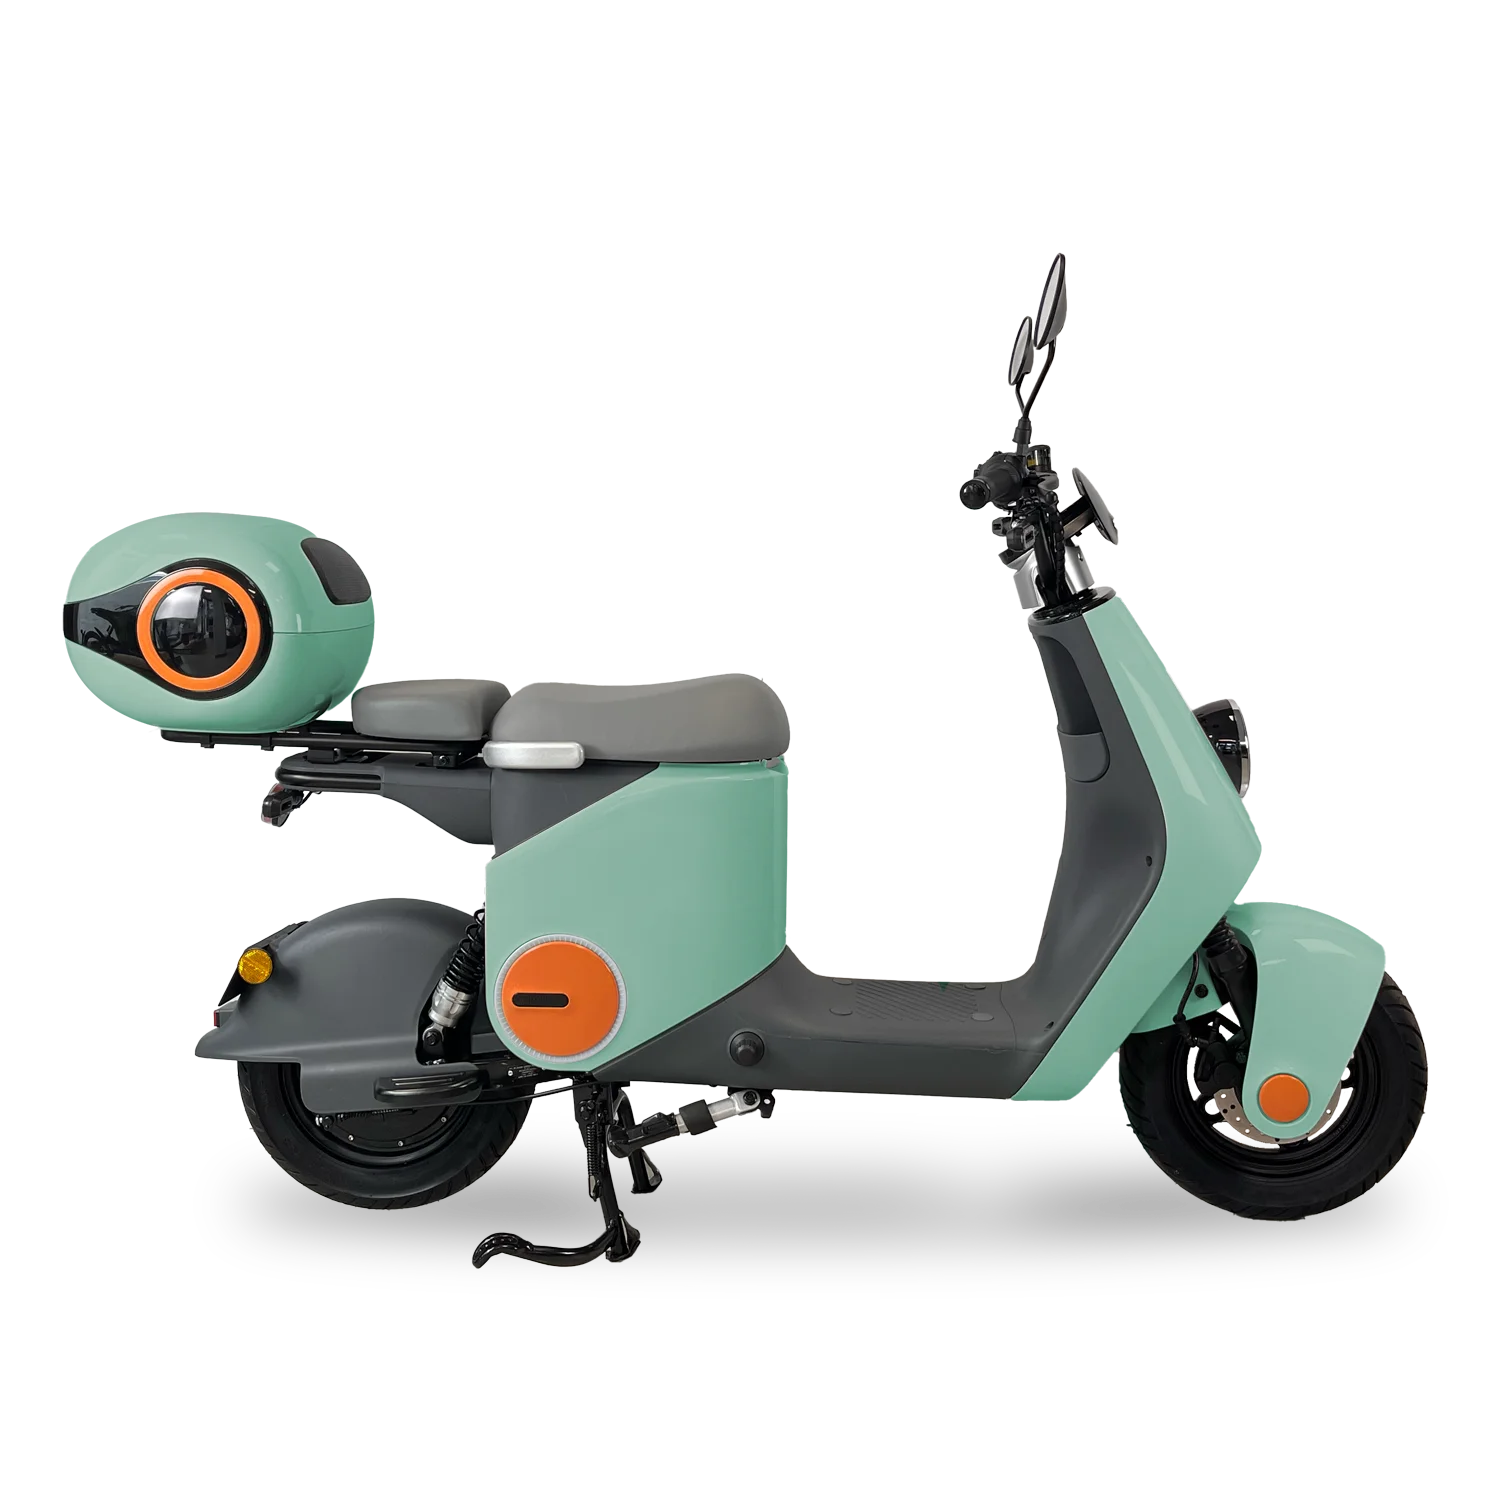 Scooter Singo 50turquoise